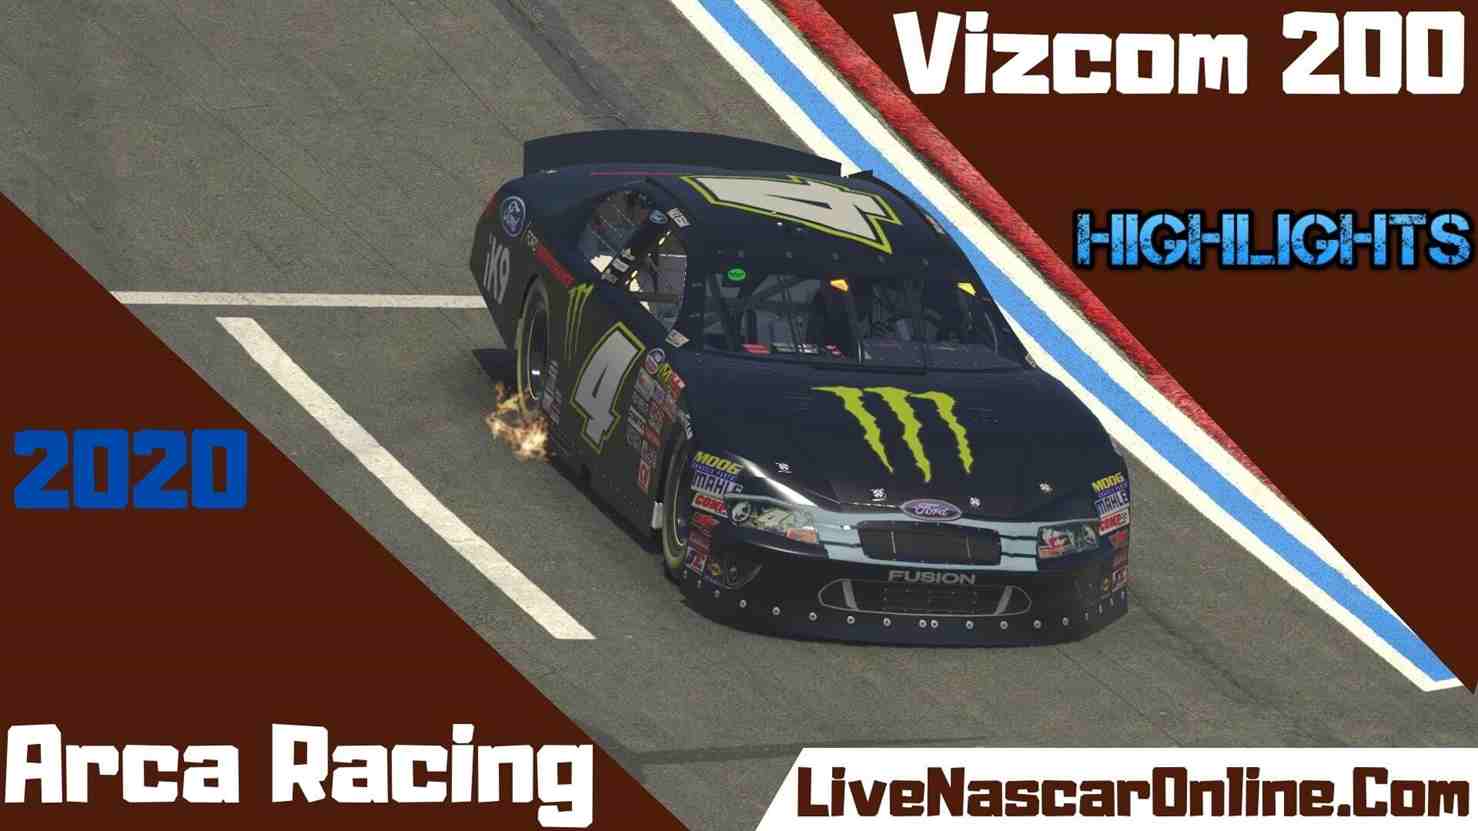 Vizcom 200 Arca Racing 2020 Highlights